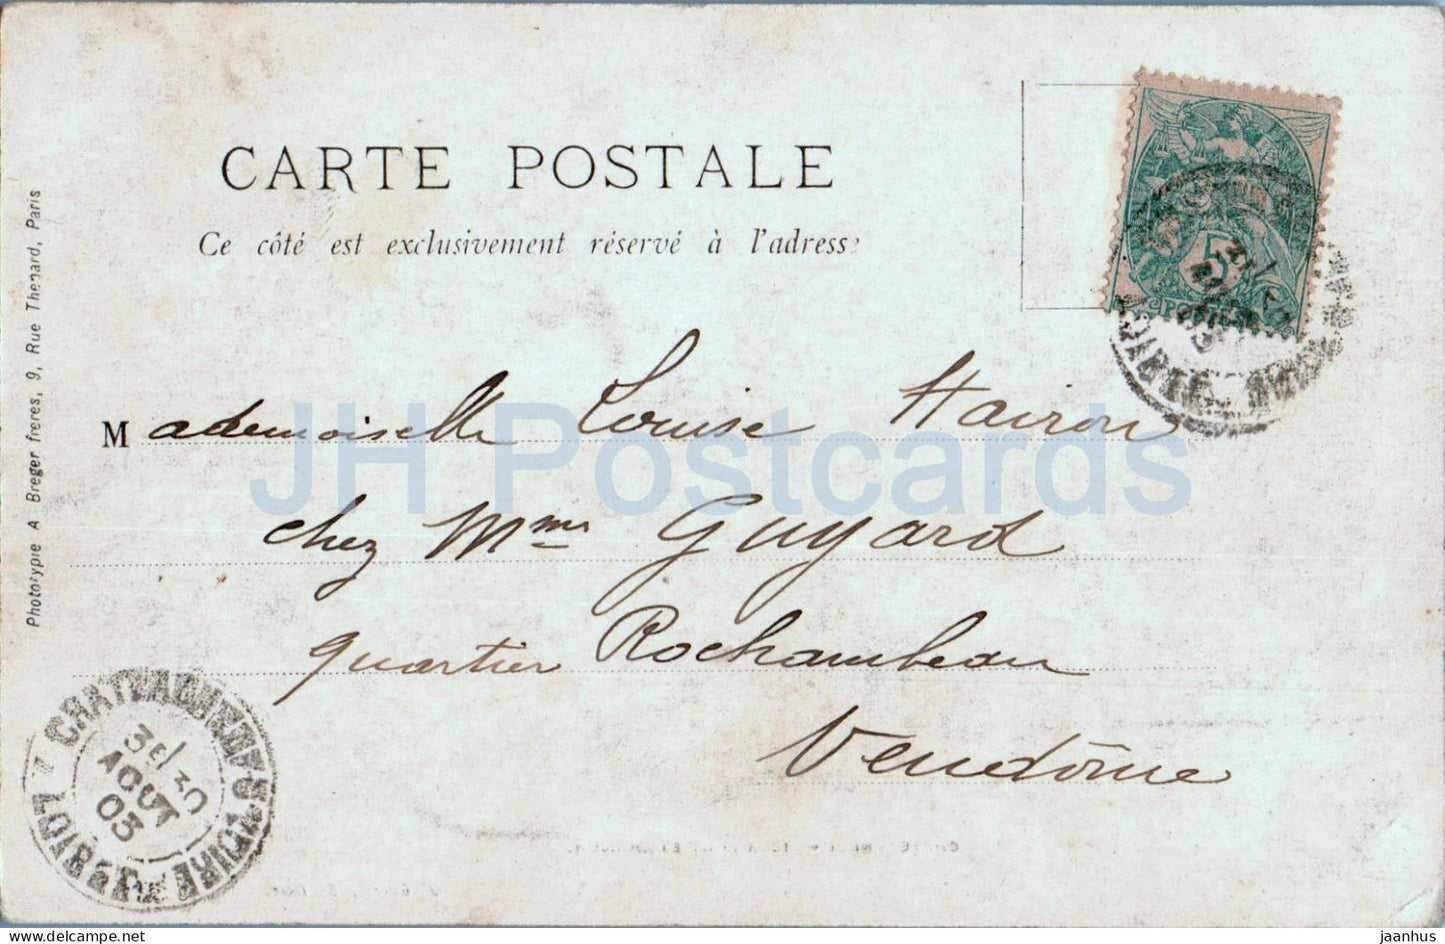 Chateauneuf - Vieux Pont et Donjon - alte Postkarte - 1903 - Frankreich - gebraucht